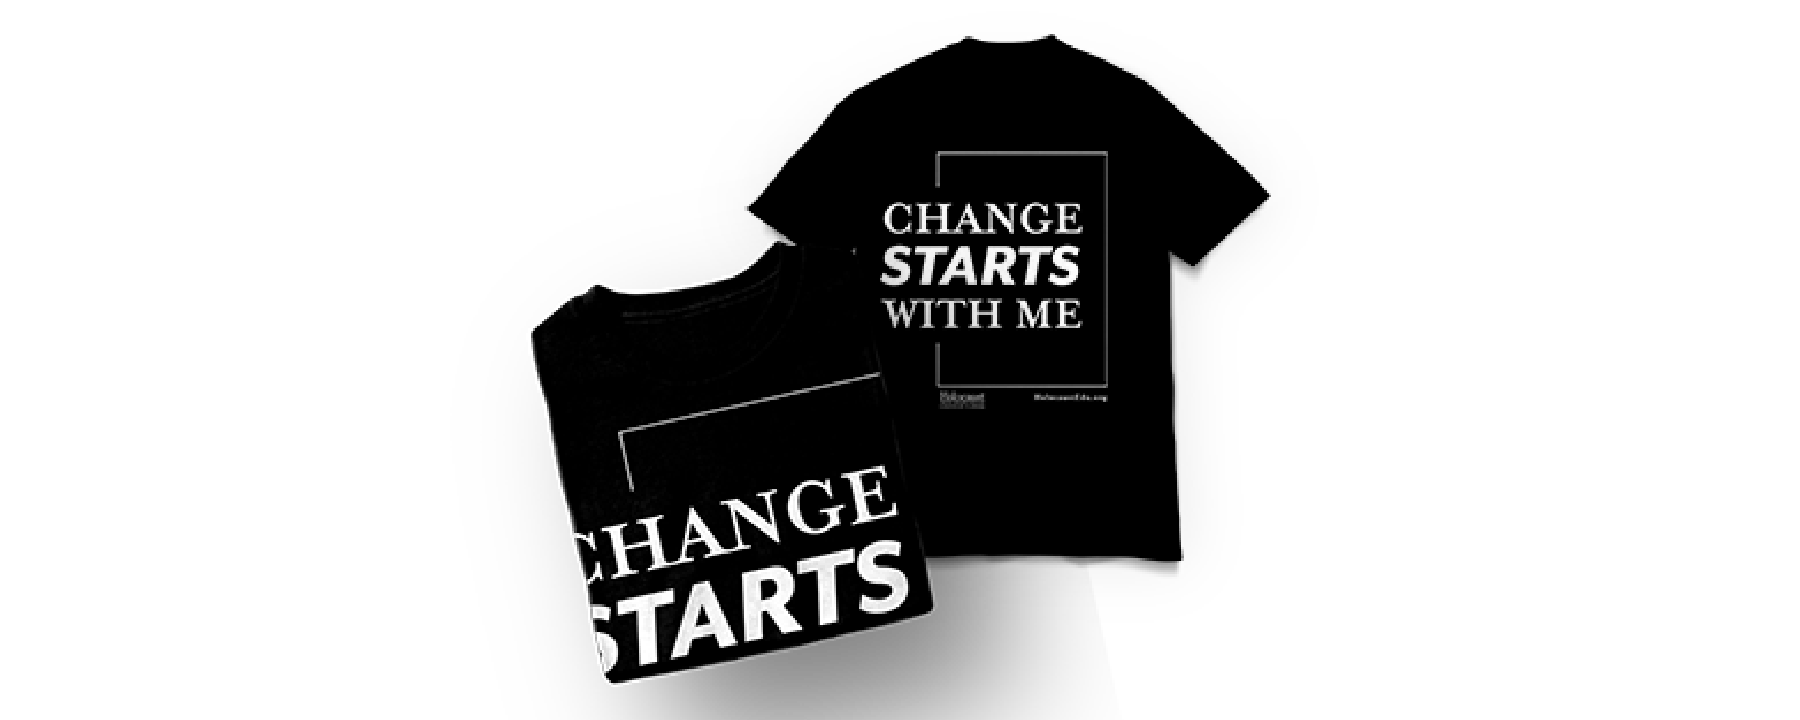 HMREC "Change Starts With Me" Shirt design